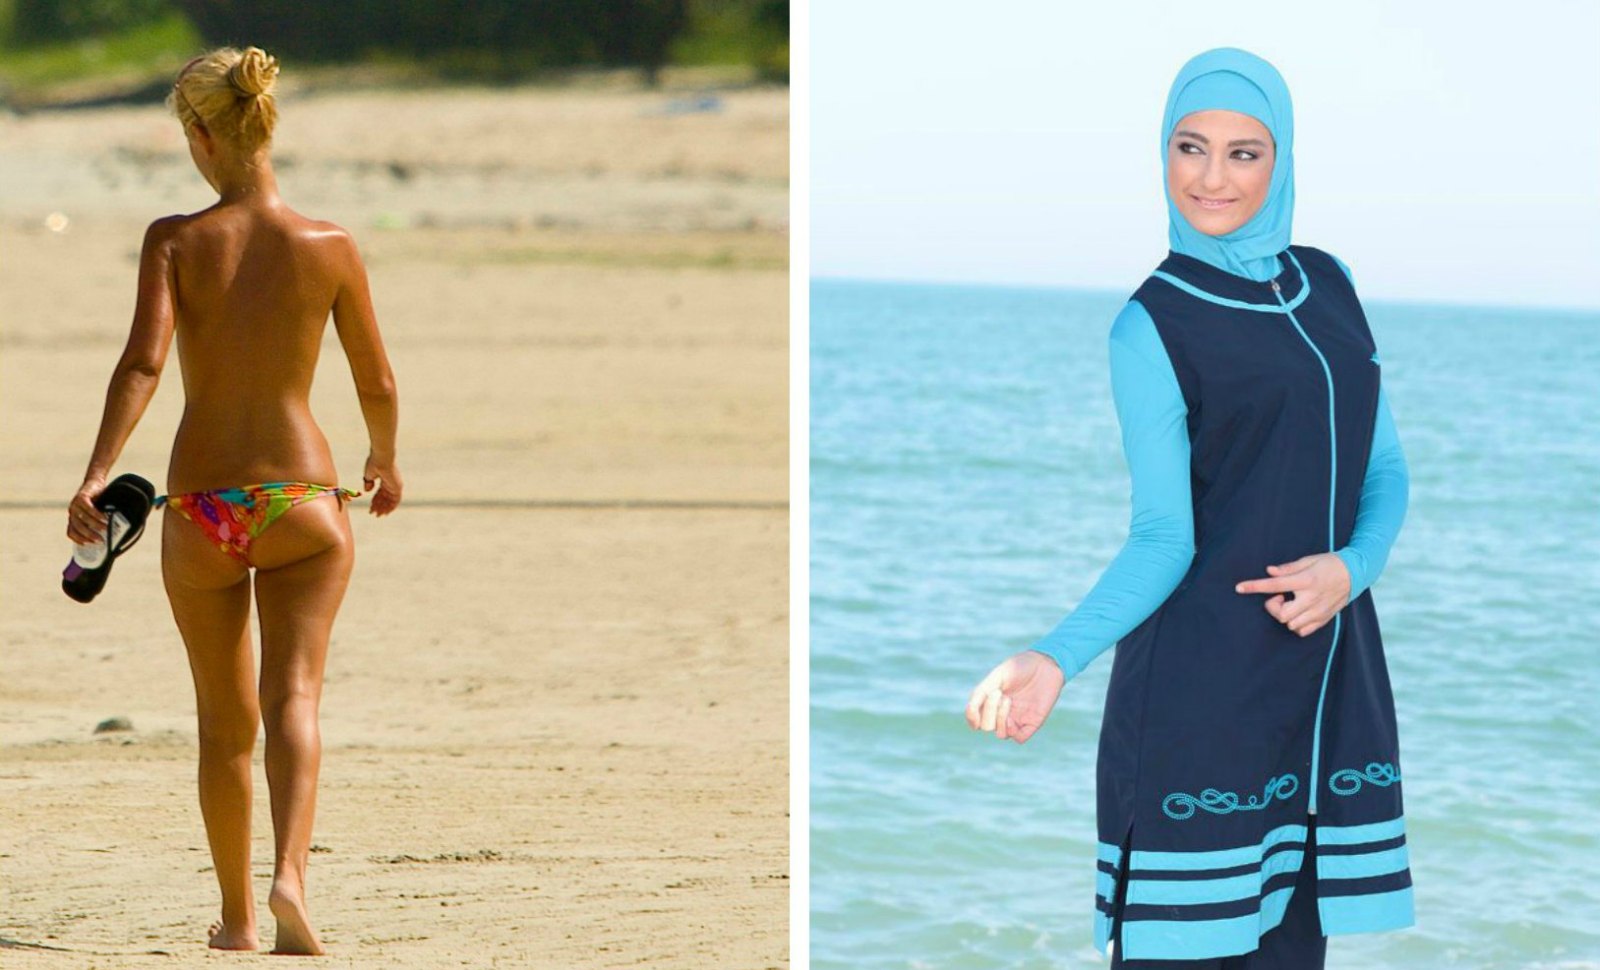 https://www.causeur.fr/wp-content/uploads/2017/07/burkini-bikini-islam-paris.jpg